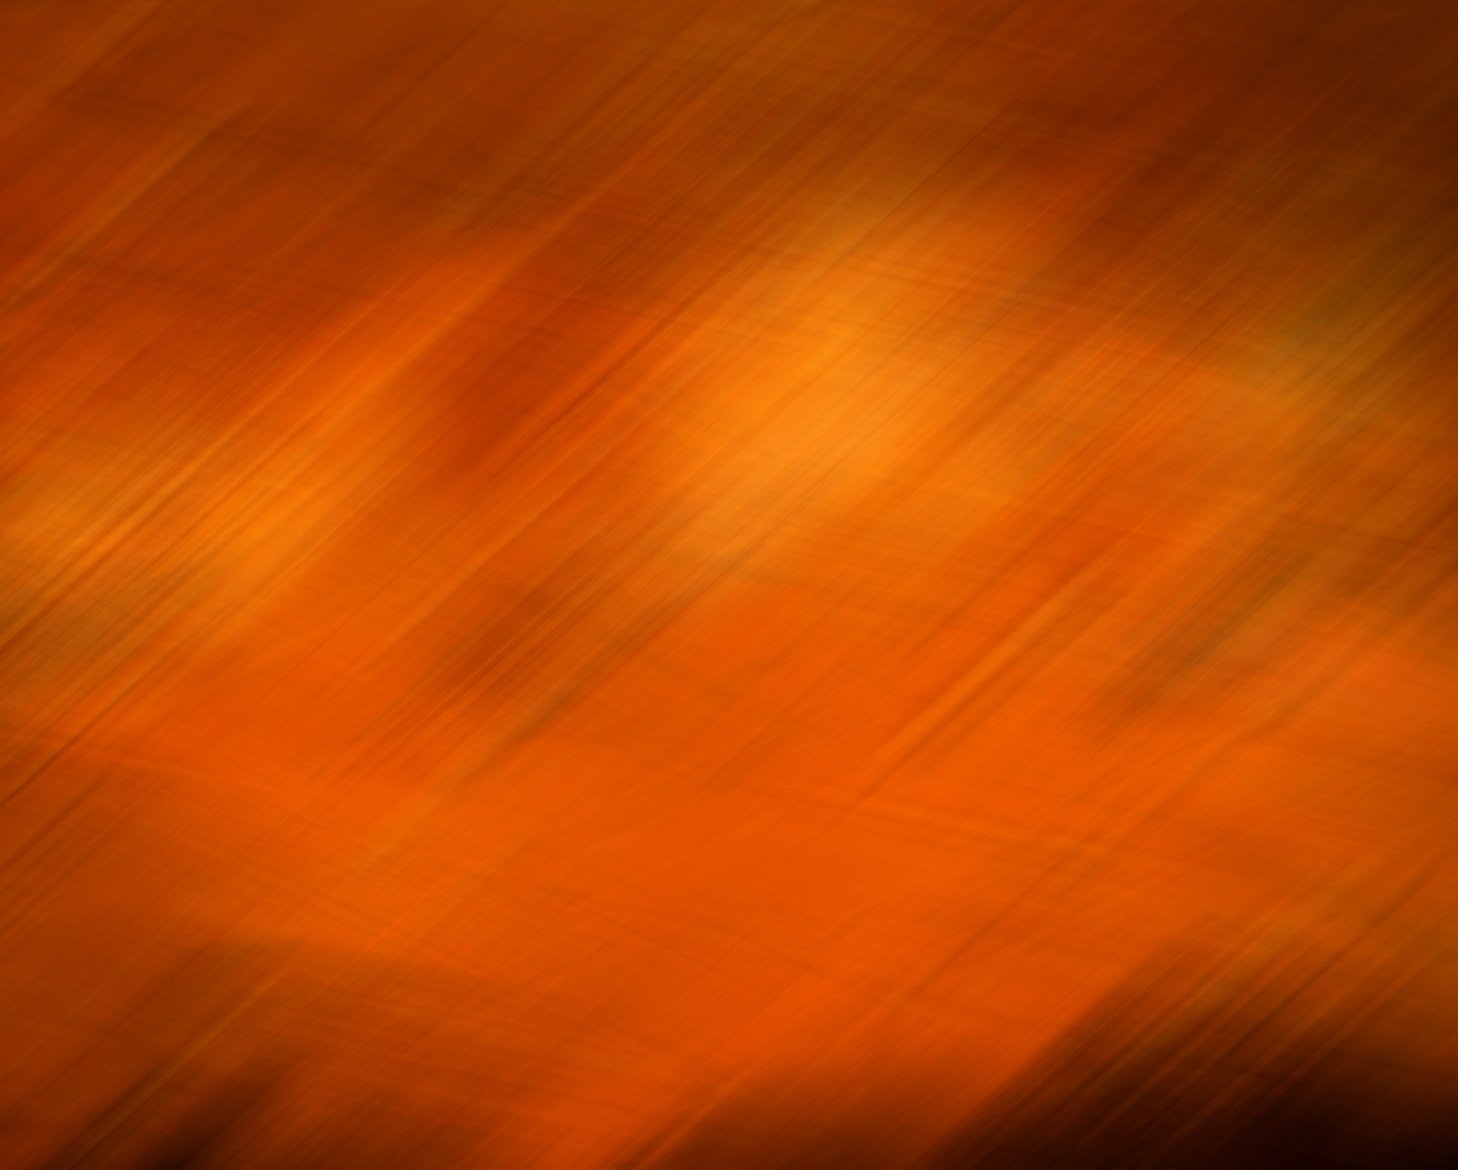 Burnt Orange Texture Background Orange brushed texture 1458x1170